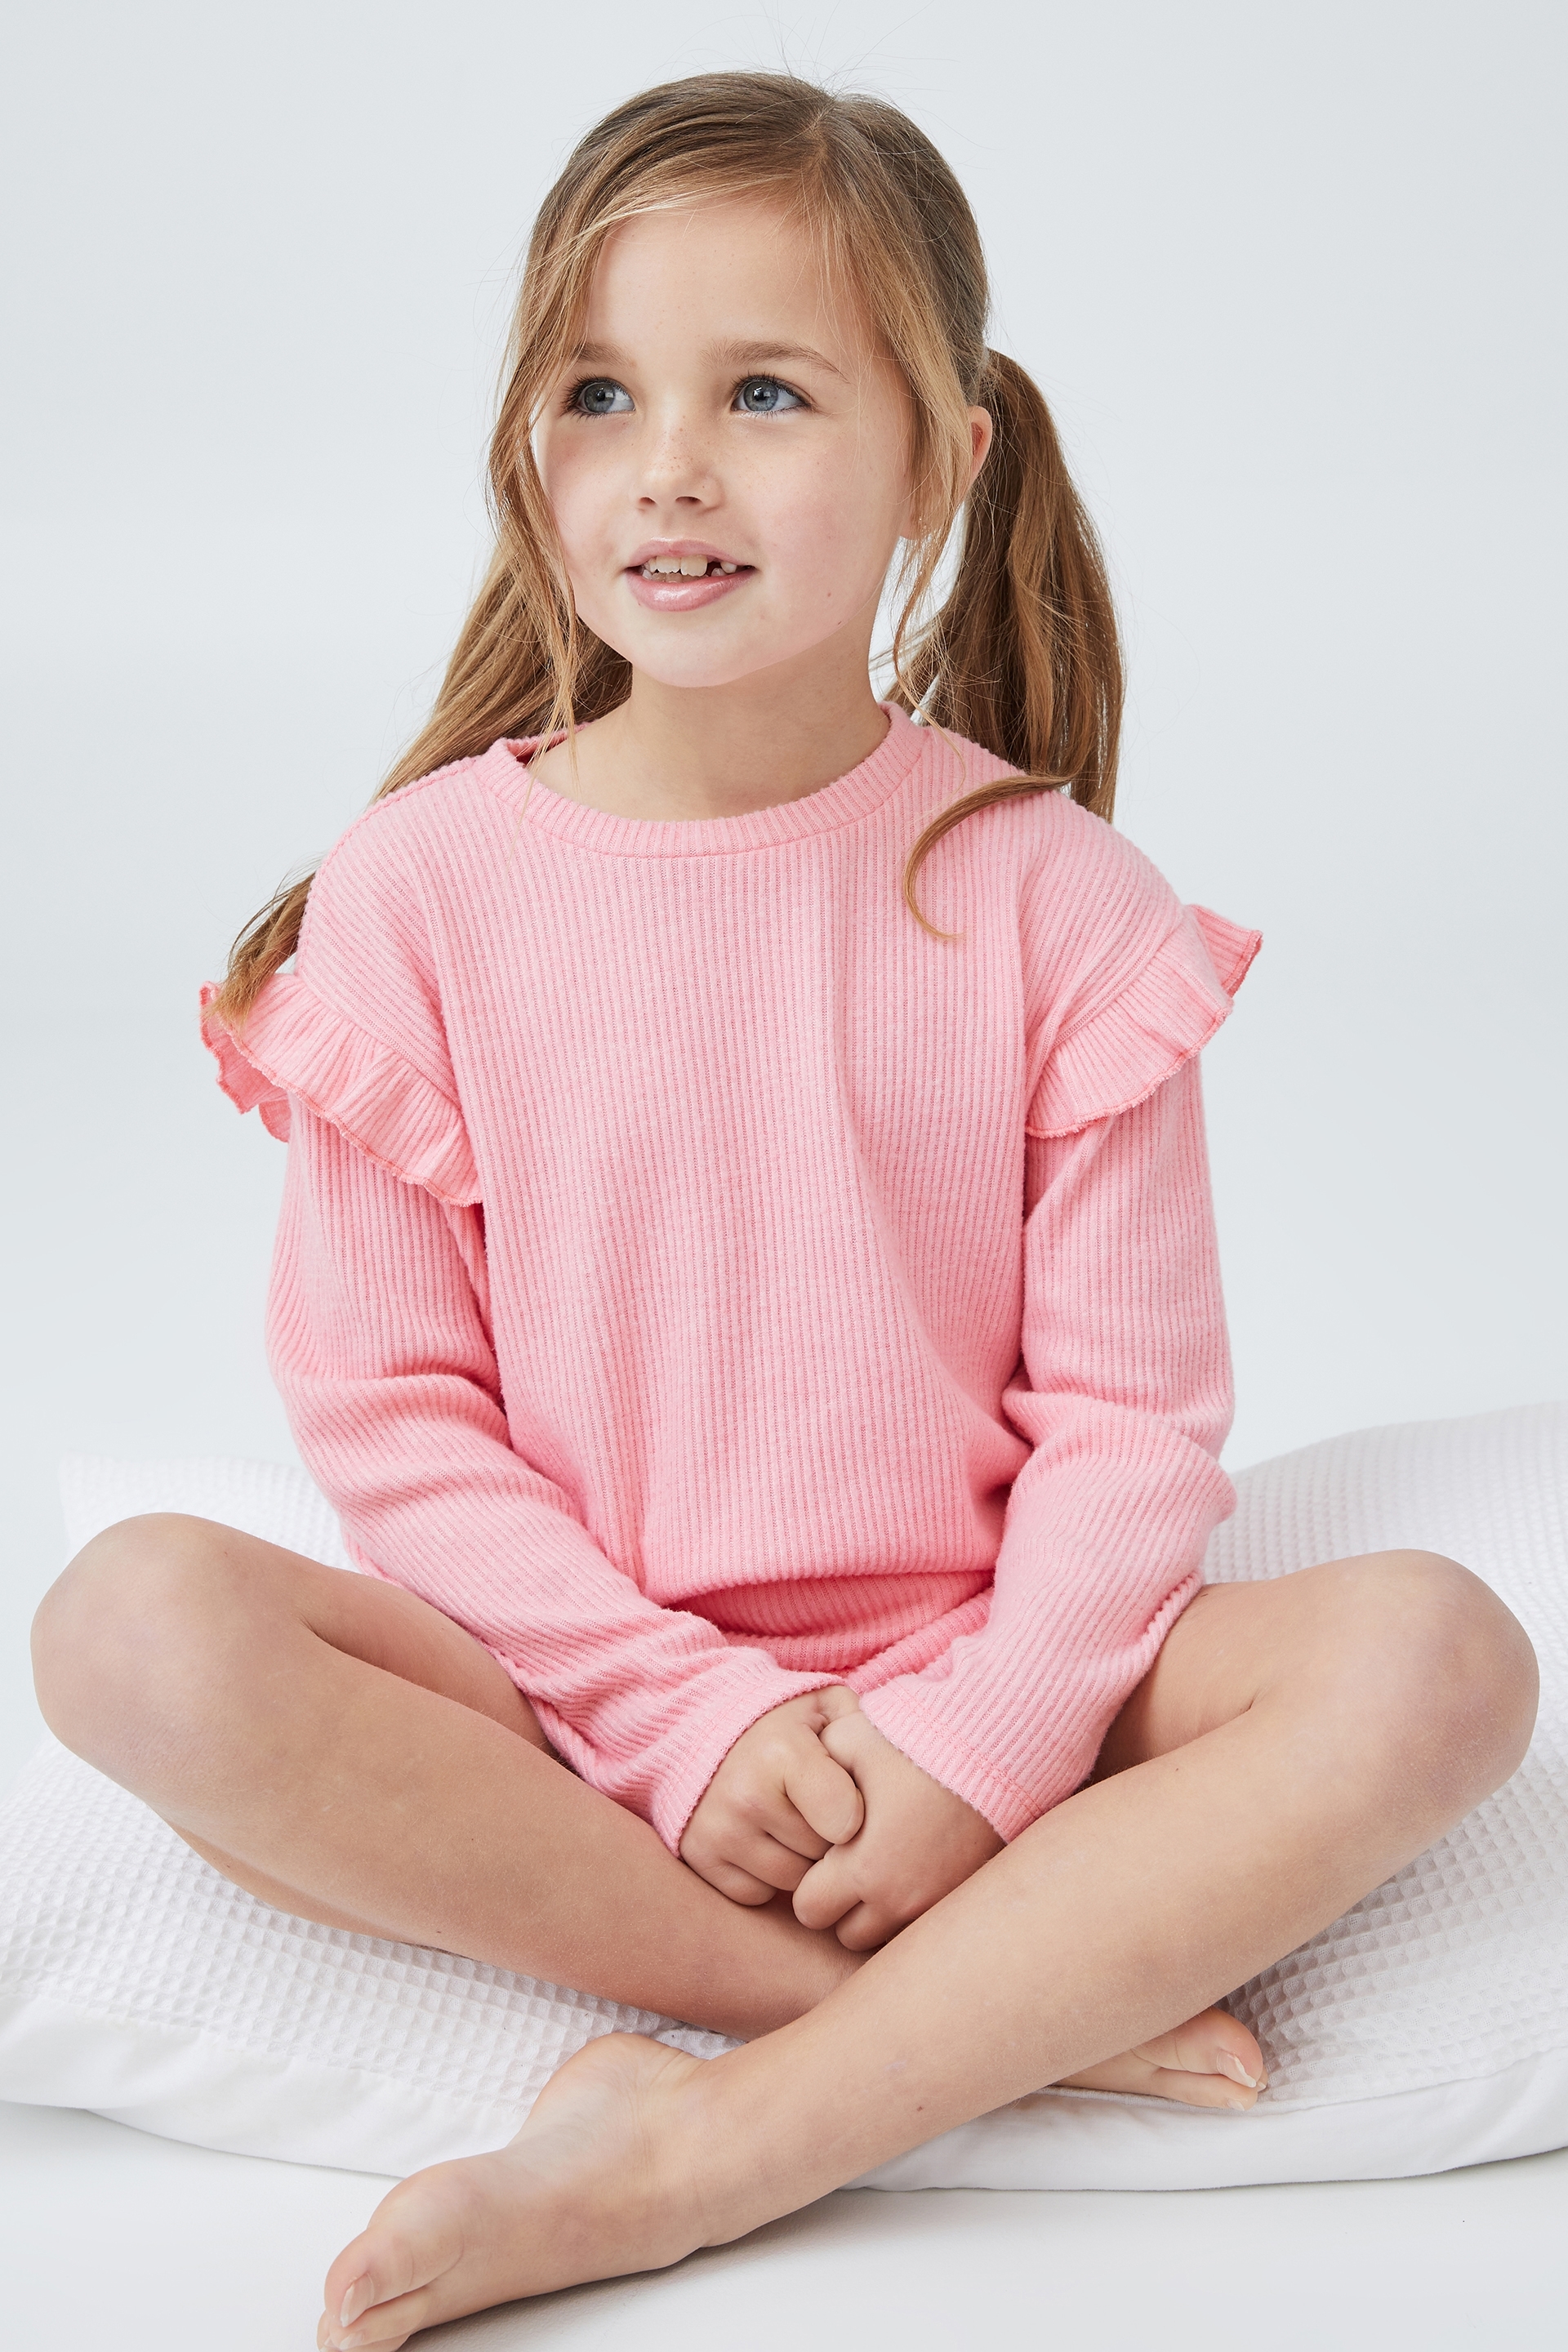 Cotton On Kids - Rosa Long Sleeve Pyjama Set - Coral dreams marle